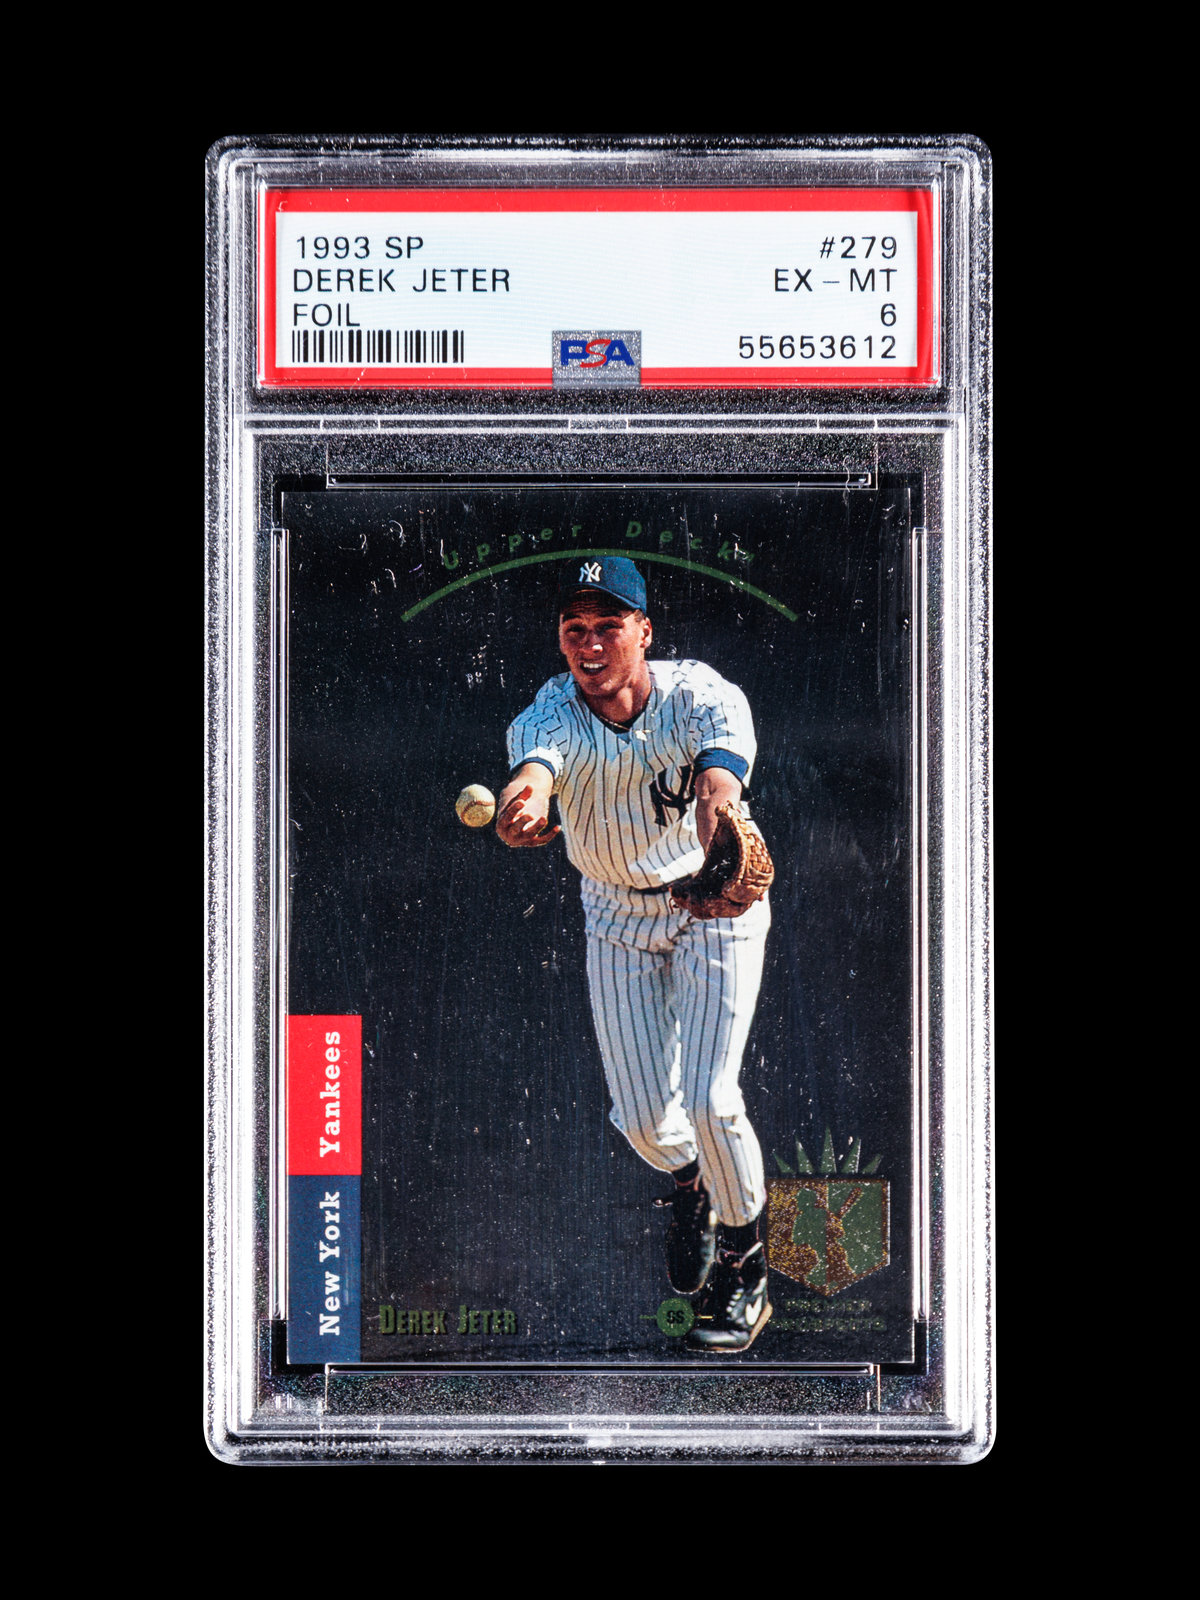 Derek Jeter 1996 Pinnacle Card #179 New York Baseball Card PSA/DNA 10 –  Sports Integrity